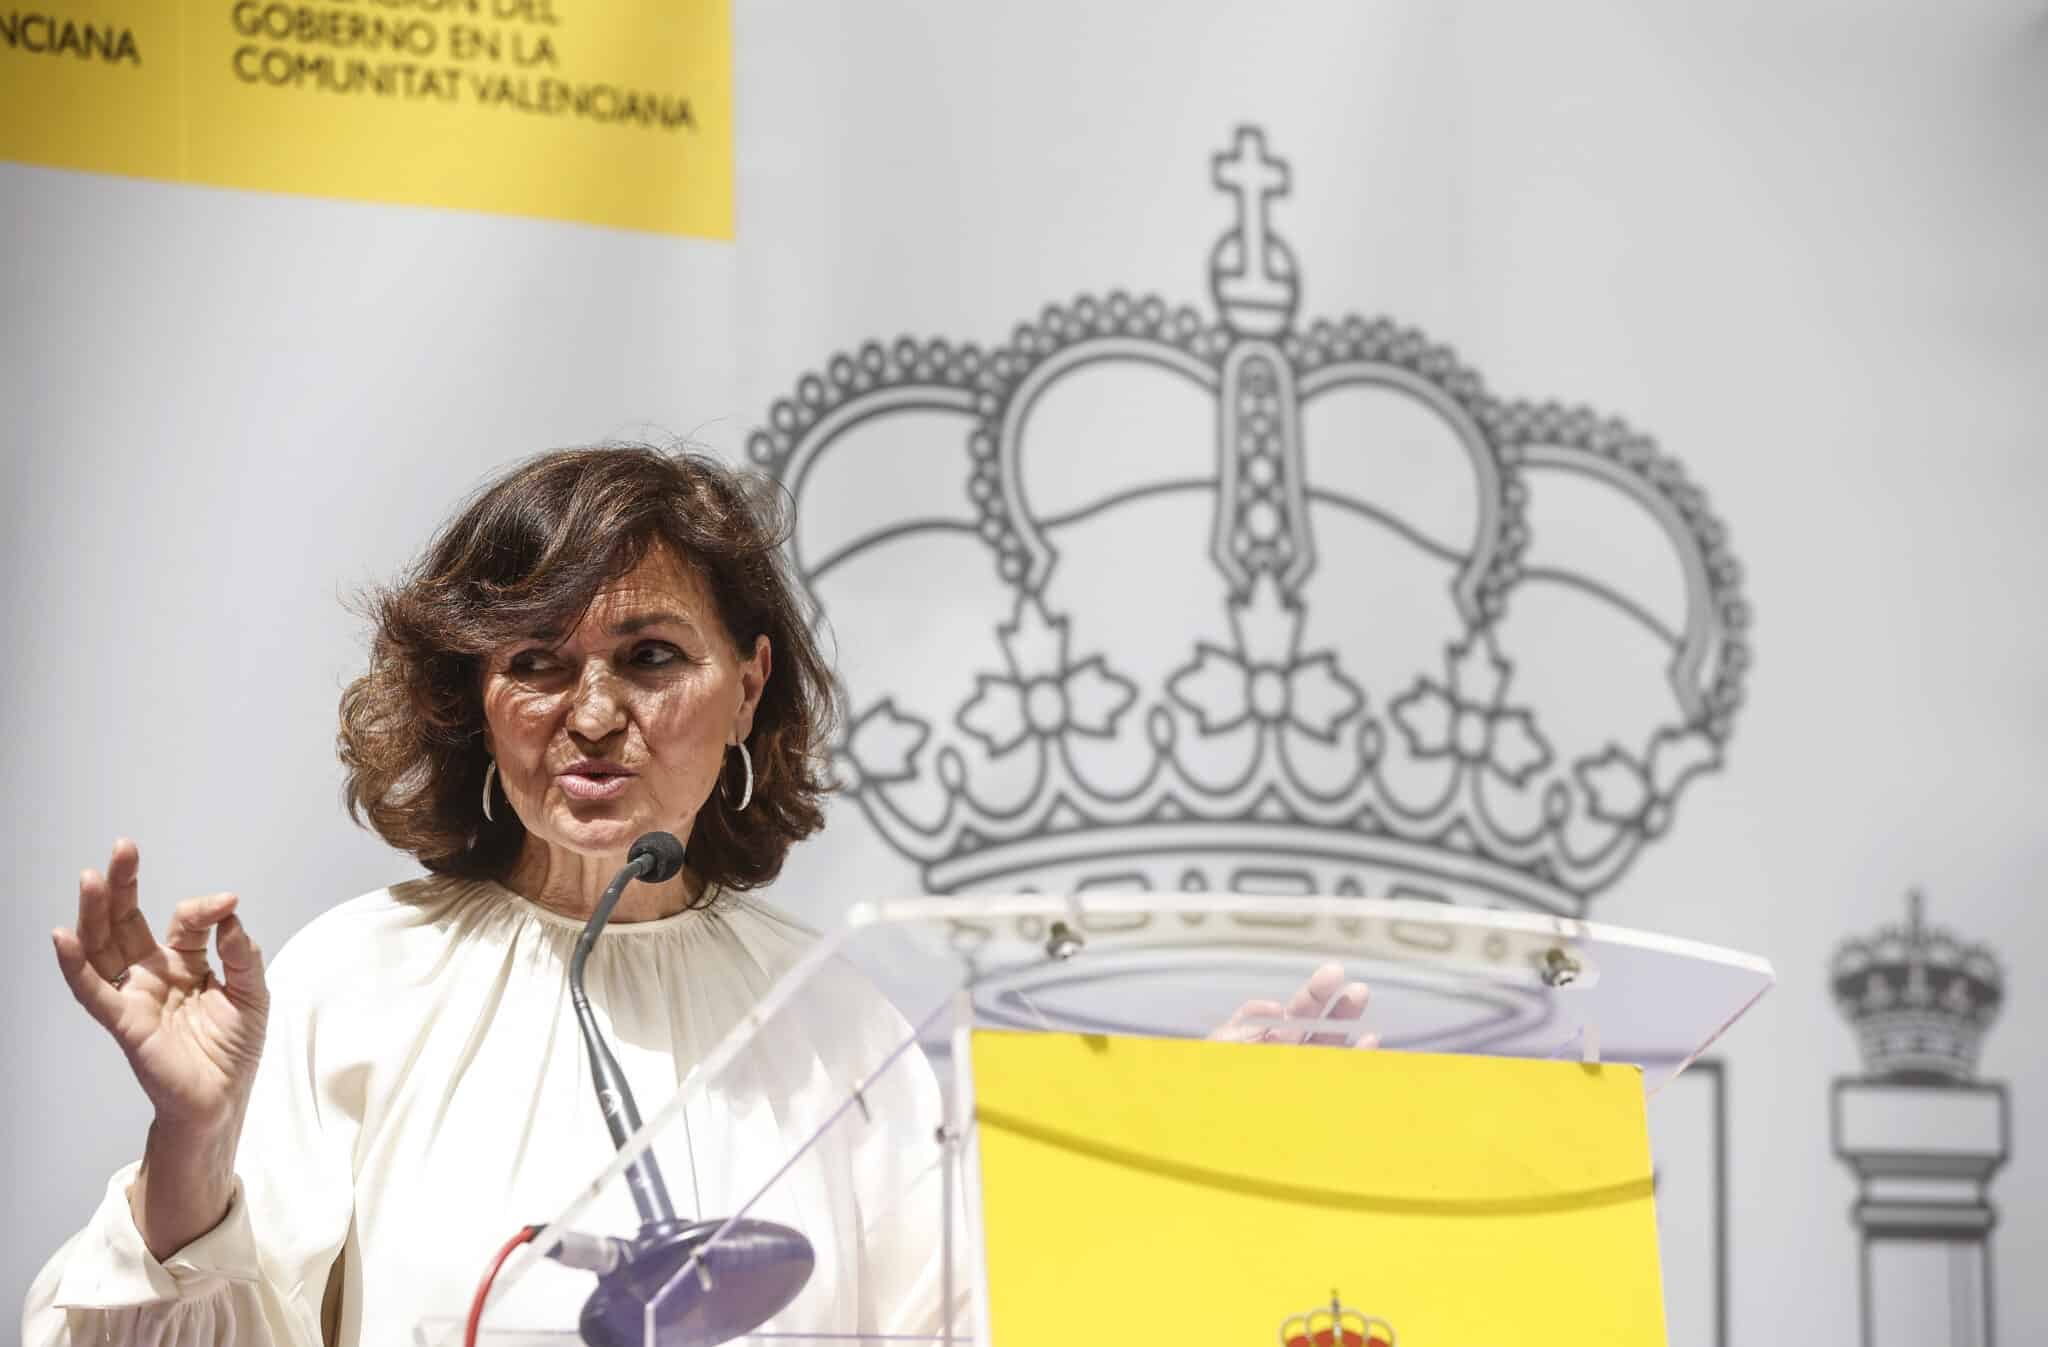 La ex vicepresidenta del Gobierno, Carmen Calvo.